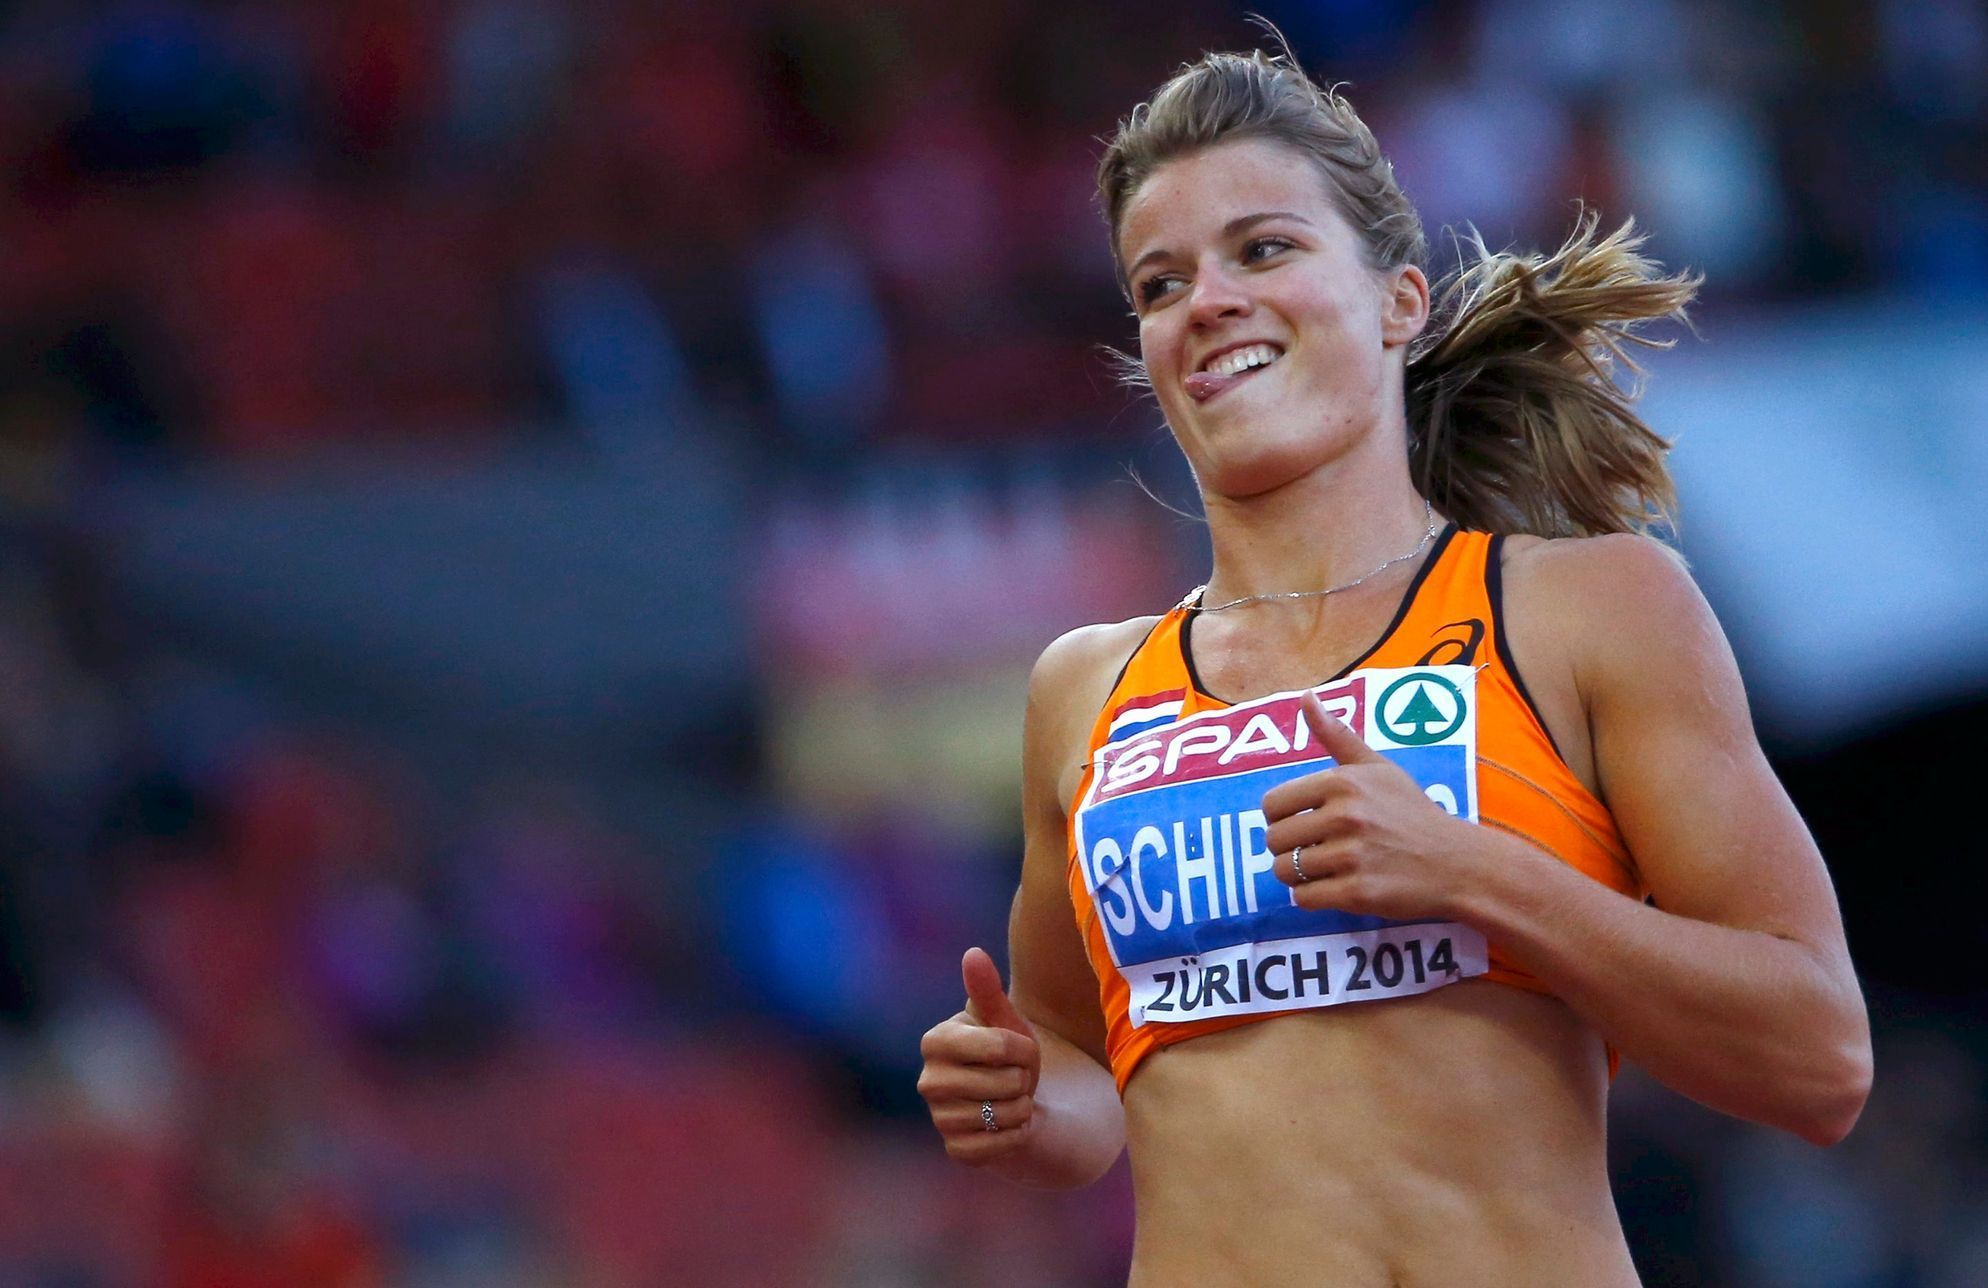 ME v atletice 2014, 200 m: Dafne Schippersová